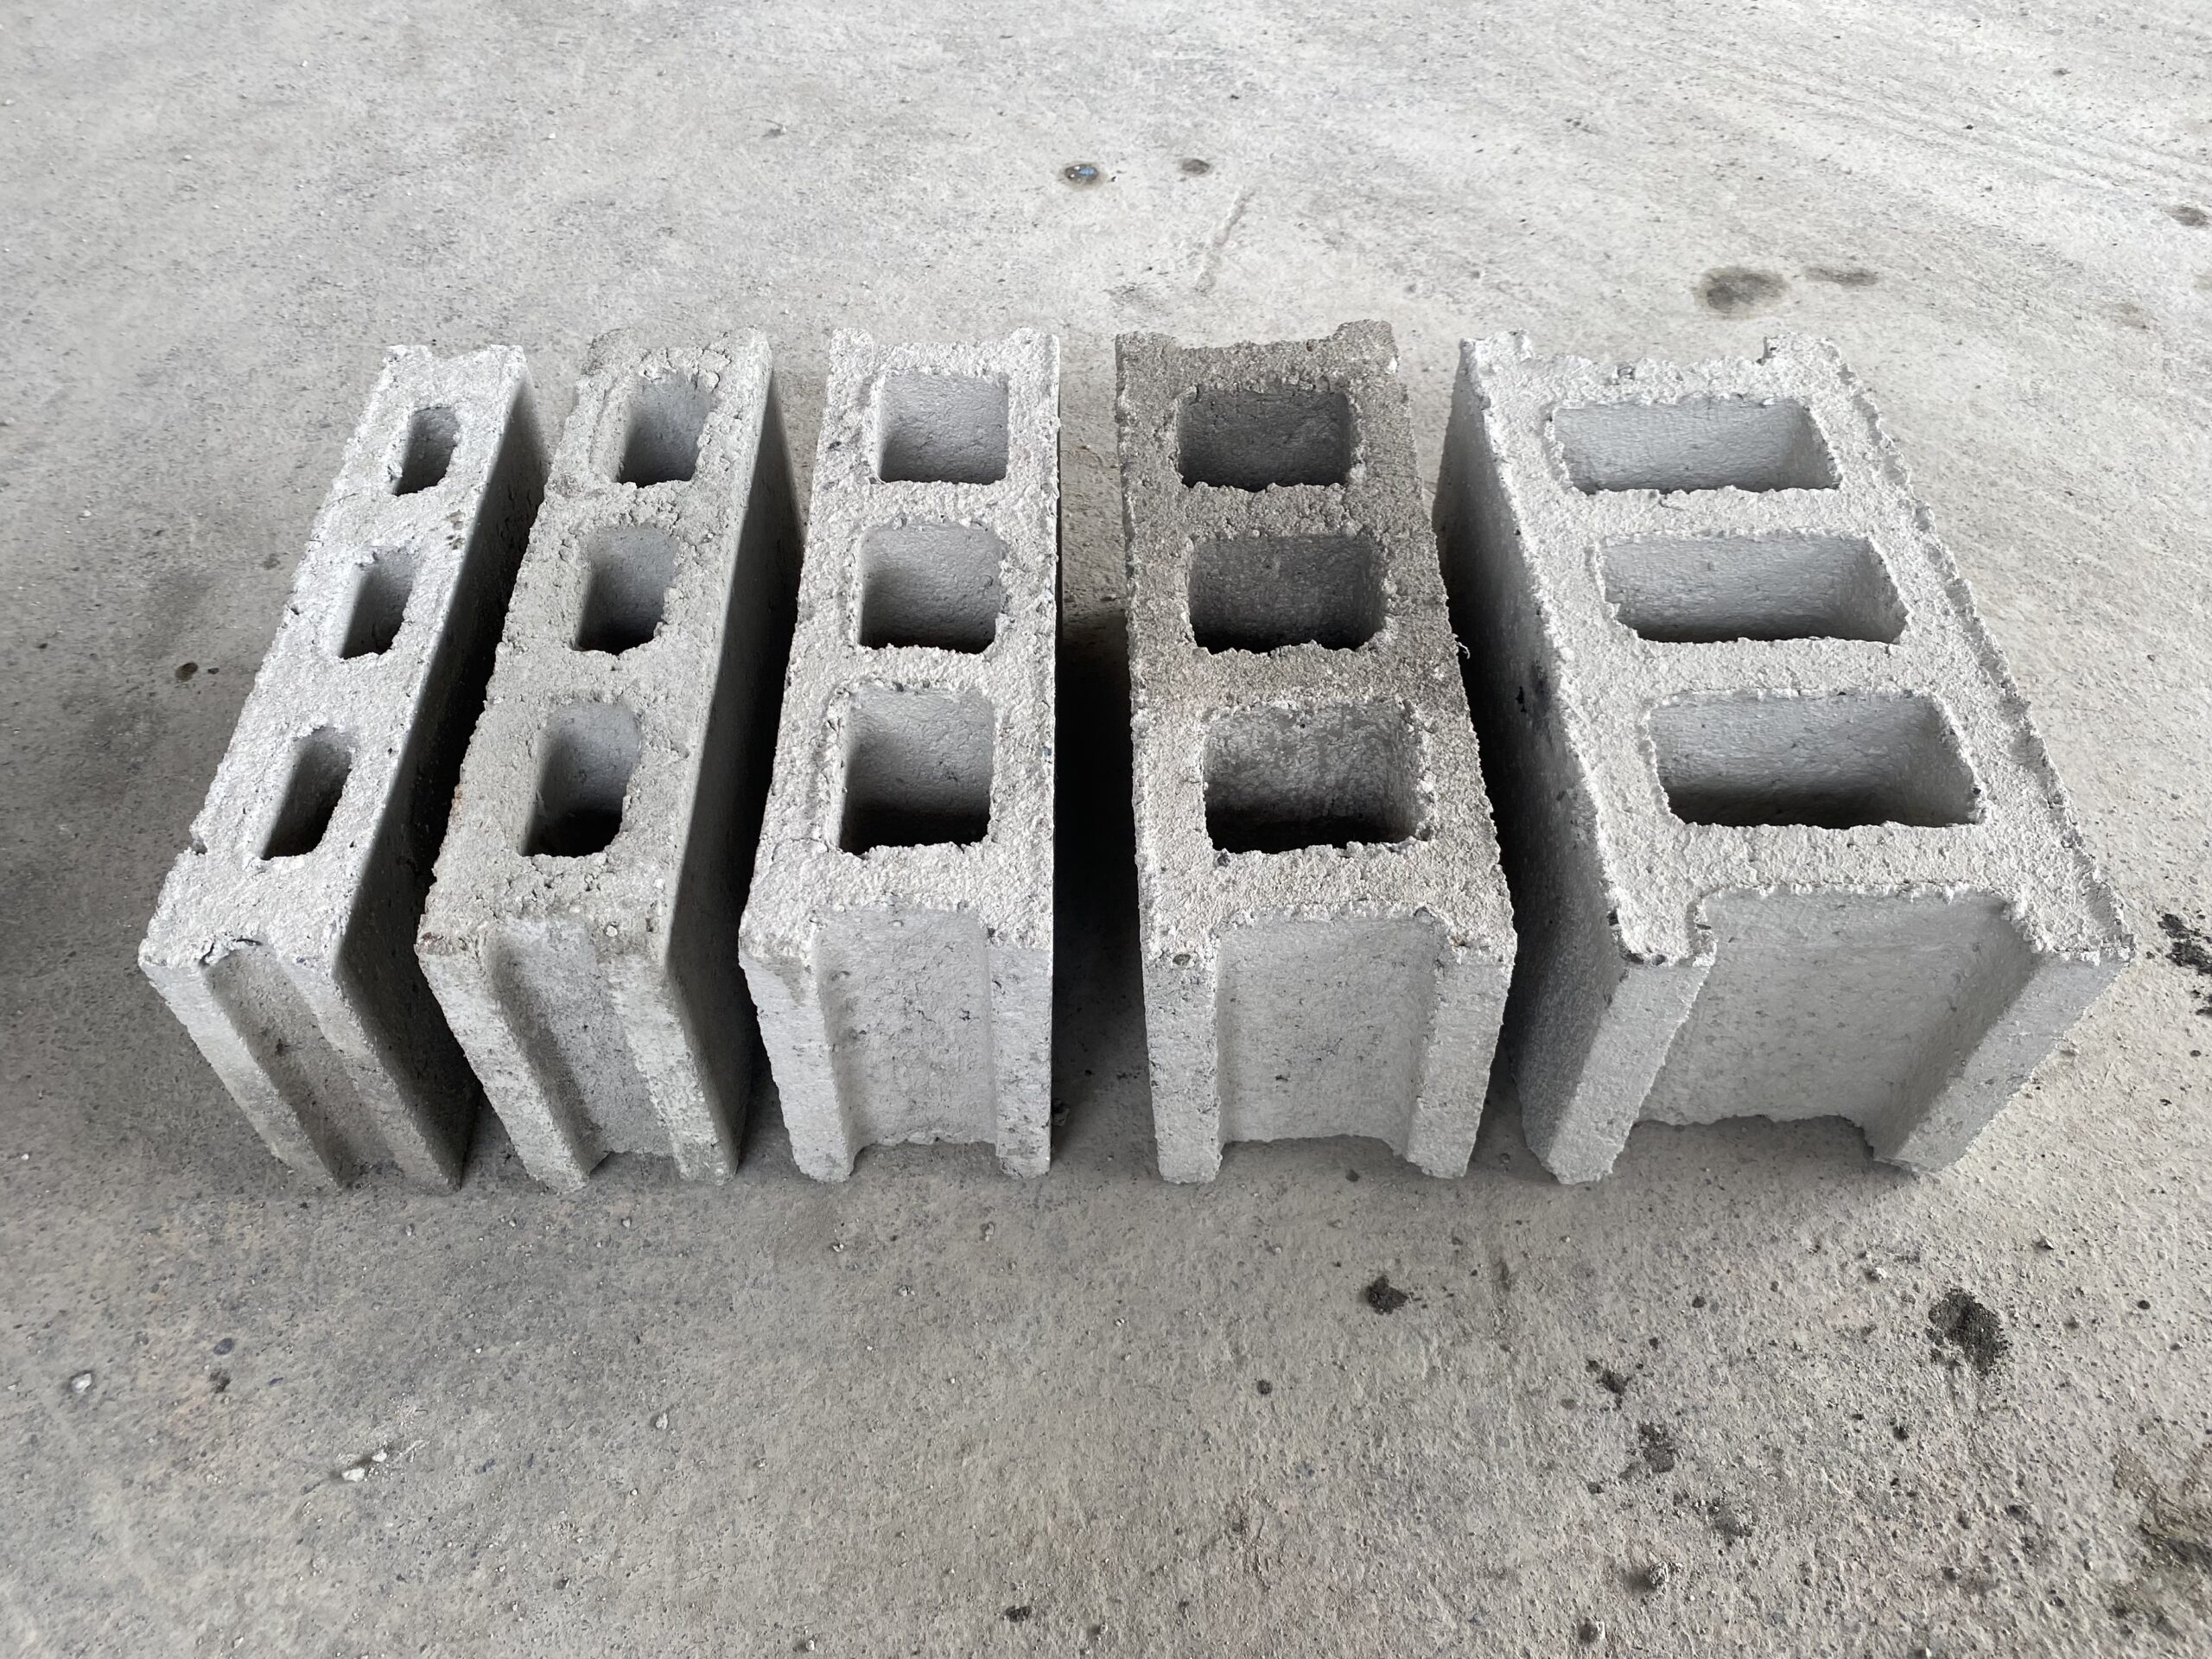 Concrete Hollow Blocks